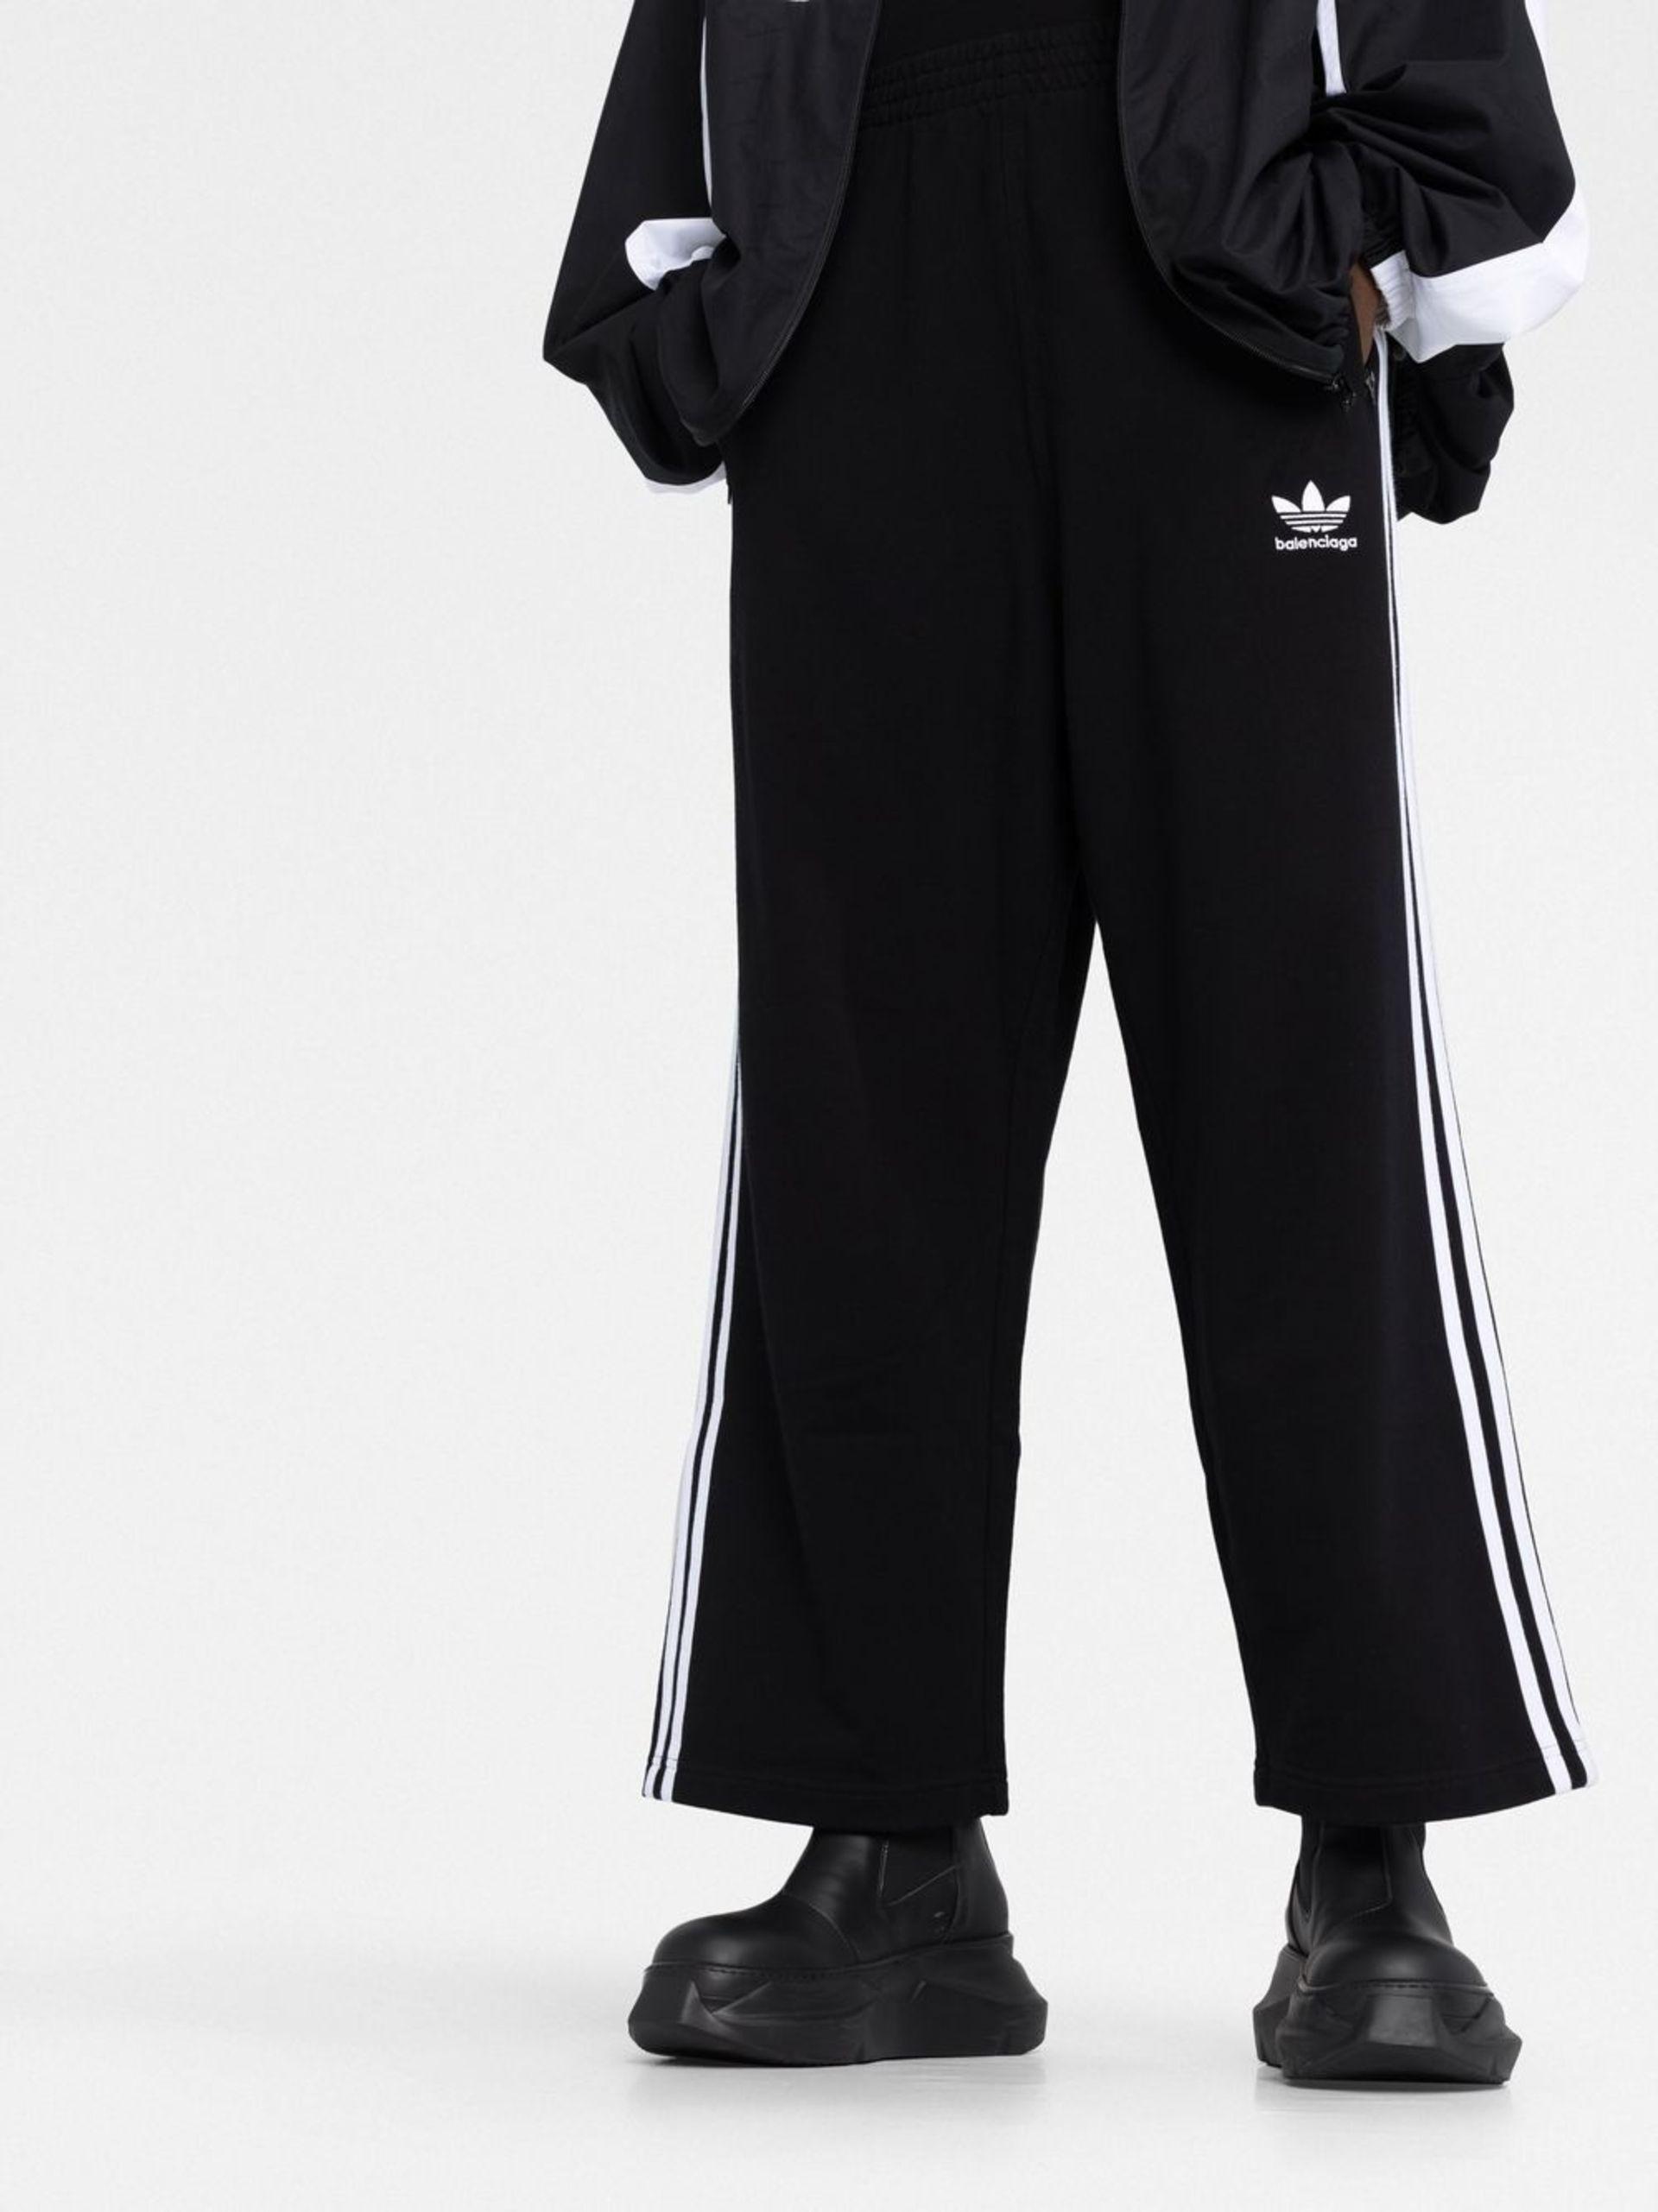 Balenciaga X Adidas Cropped Track Pants in Black | Lyst